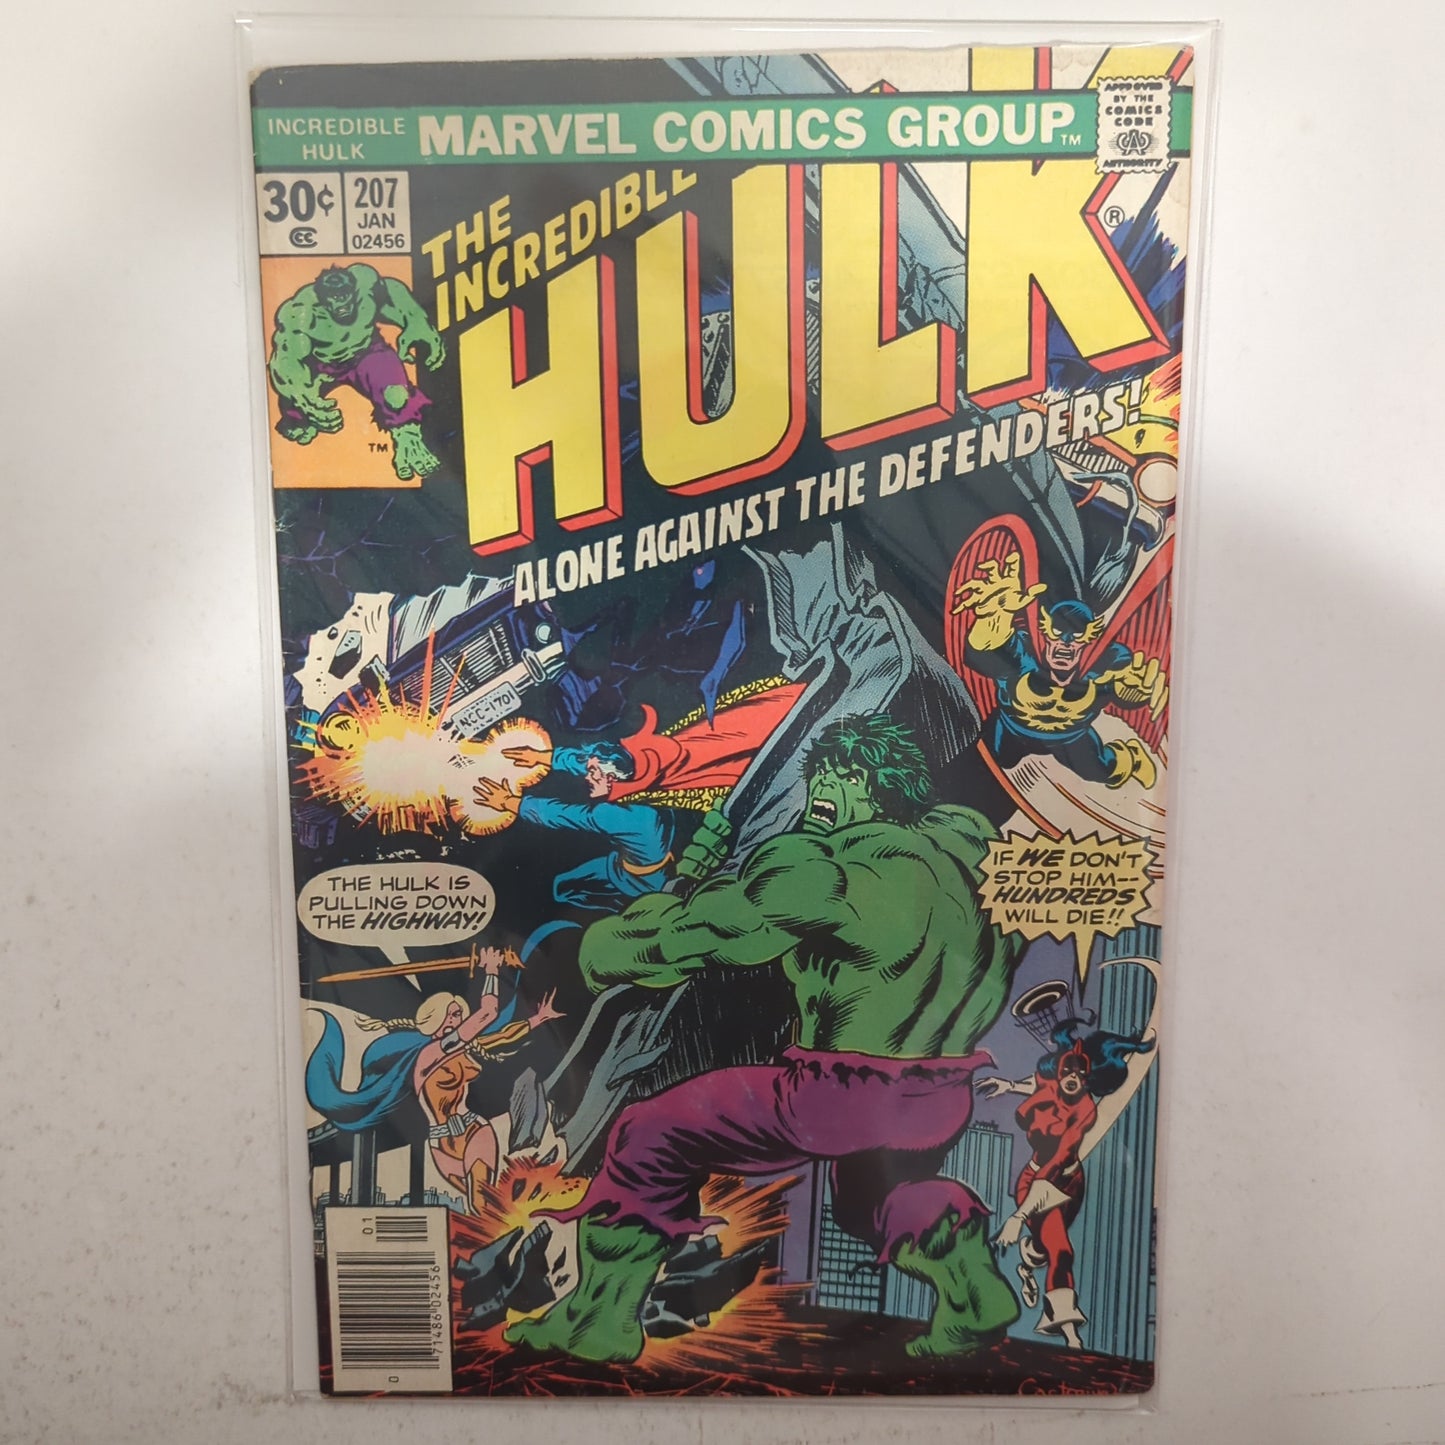 The Incredible Hulk #207 Newsstand